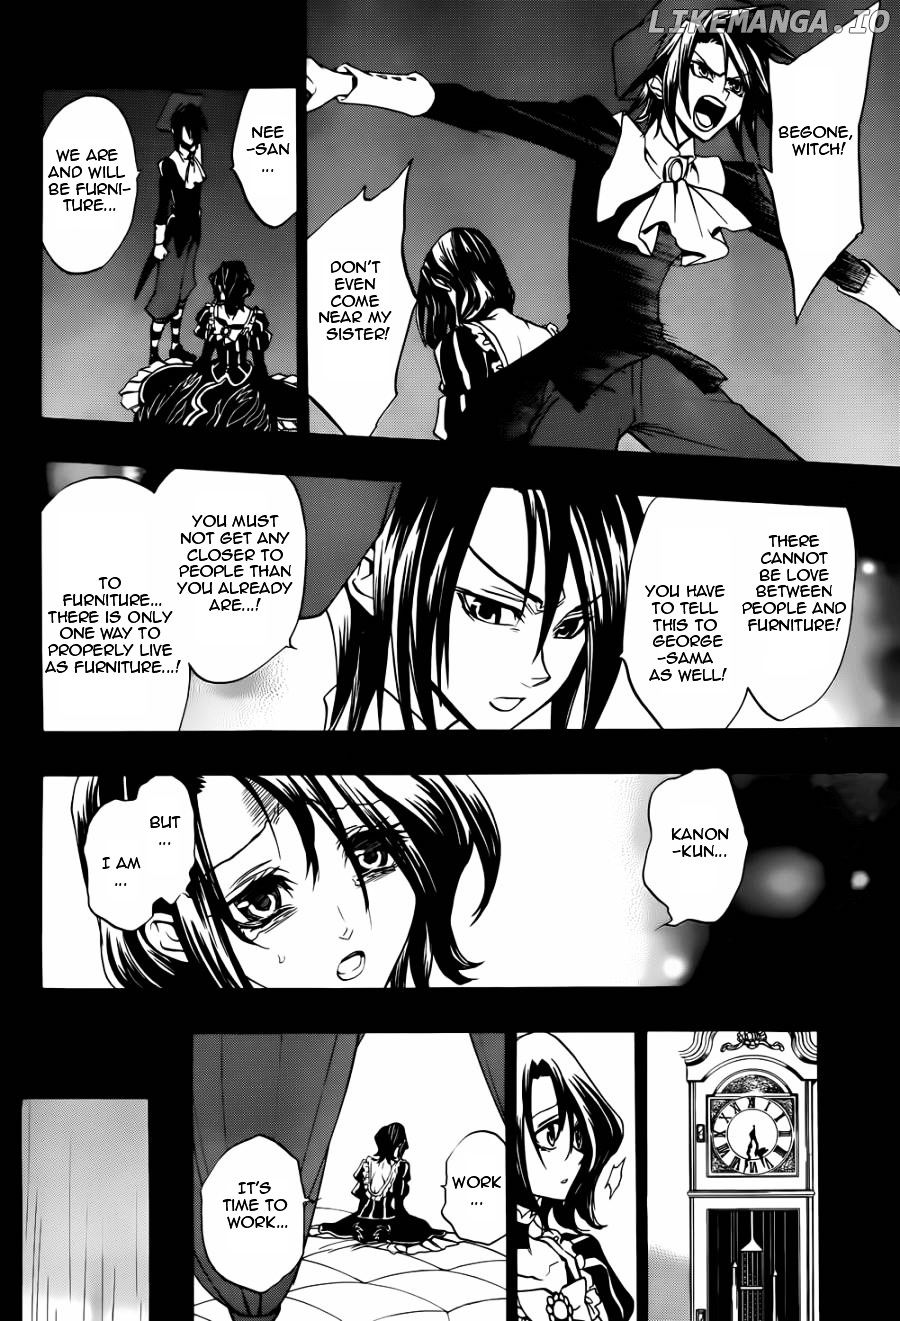 Umineko no Naku Koro ni Chiru Episode 8: Twilight of the Golden Witch chapter 24.4 - page 2